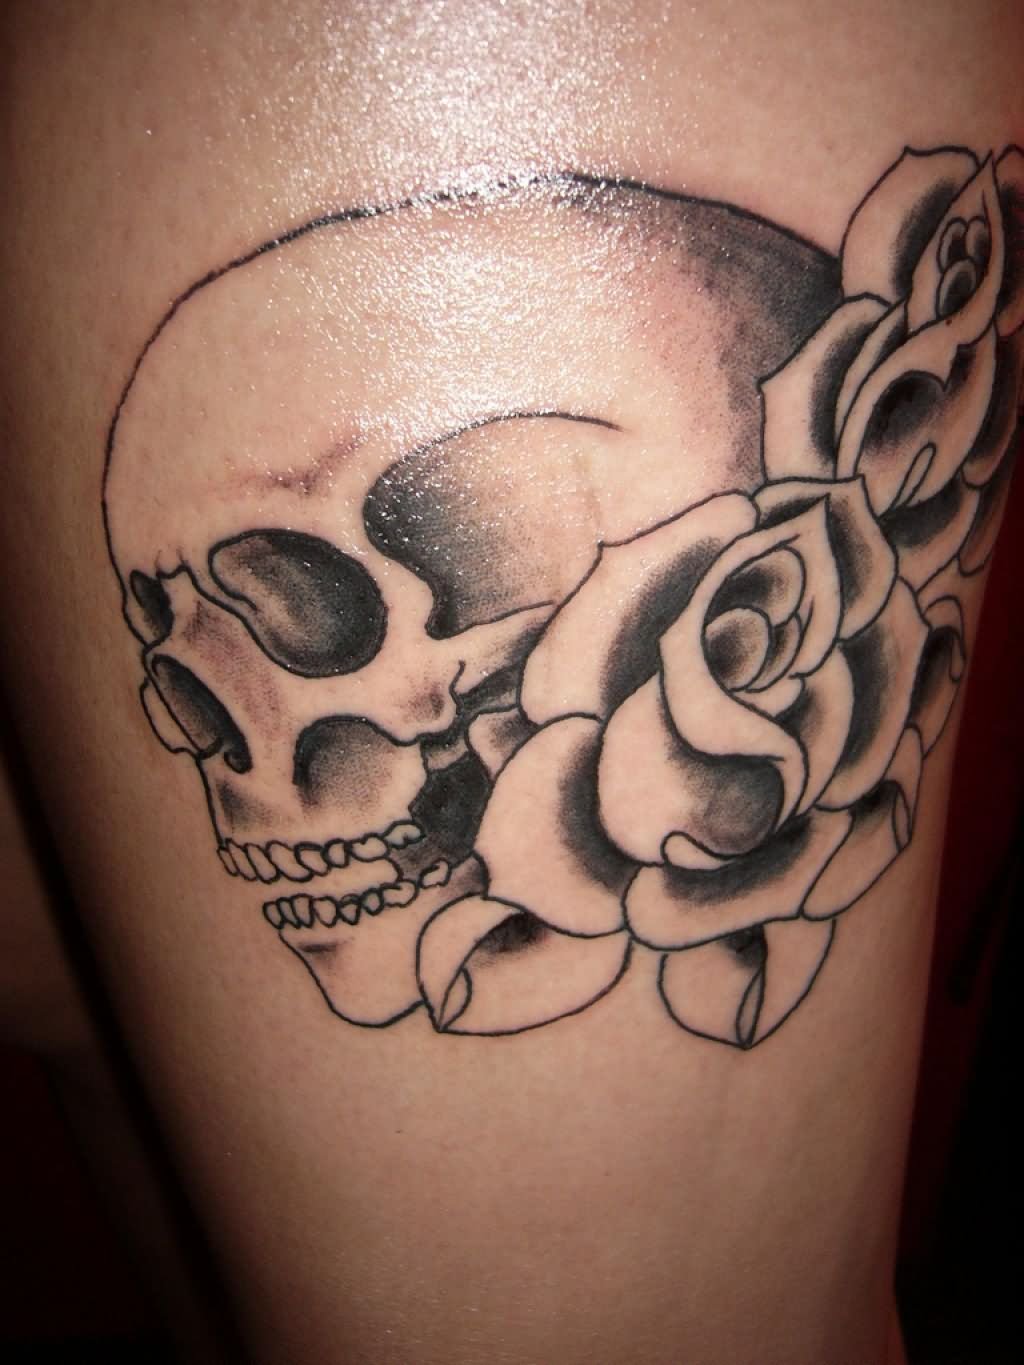 Black Ink Feminine Flower With Roses Tattoo Design